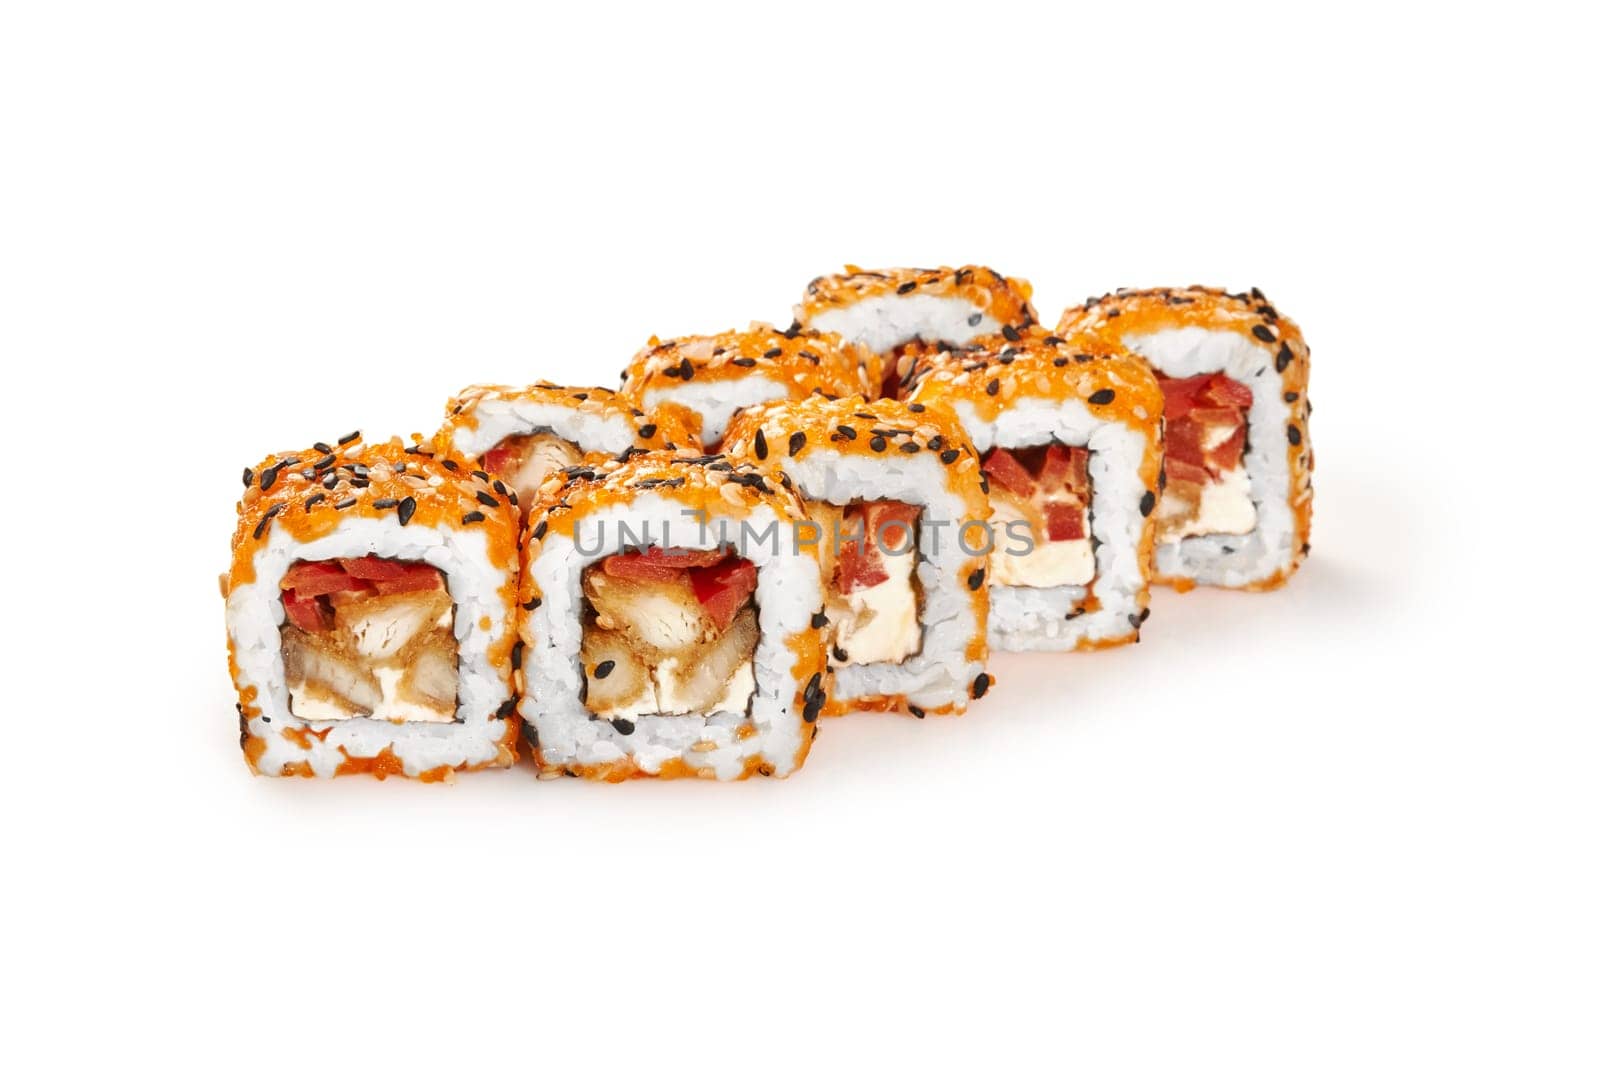 Chicken katsu sushi rolls with tobiko, cream cheese and tomatoes by nazarovsergey